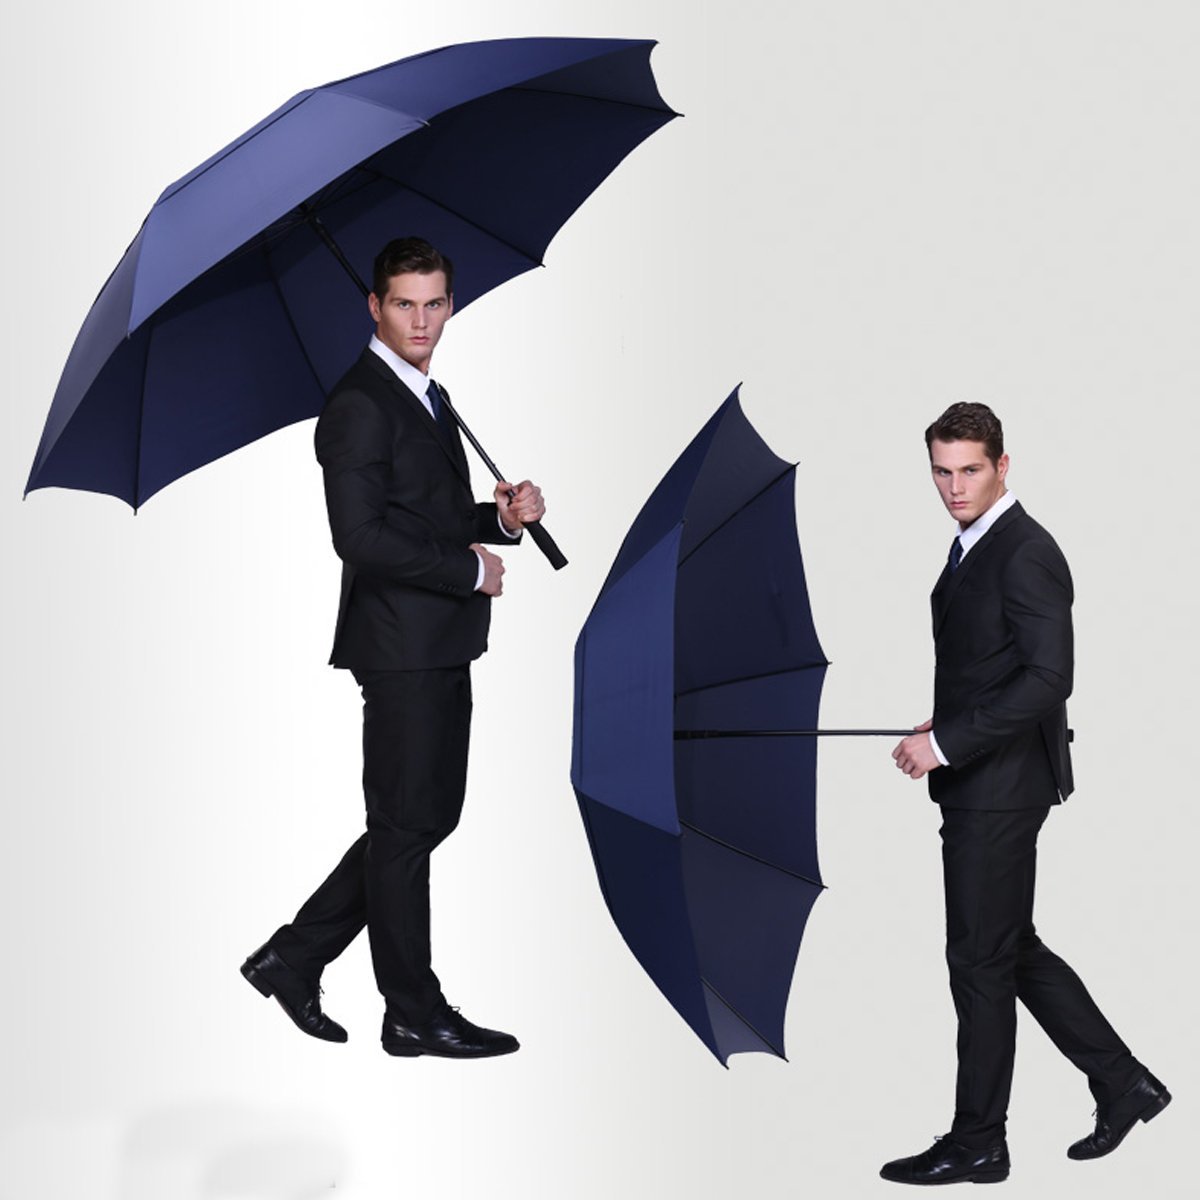 FiskTool Automatic Open Extra Large Oversize Vented Double Canopy Windproof Waterproof Golf Umbrellas